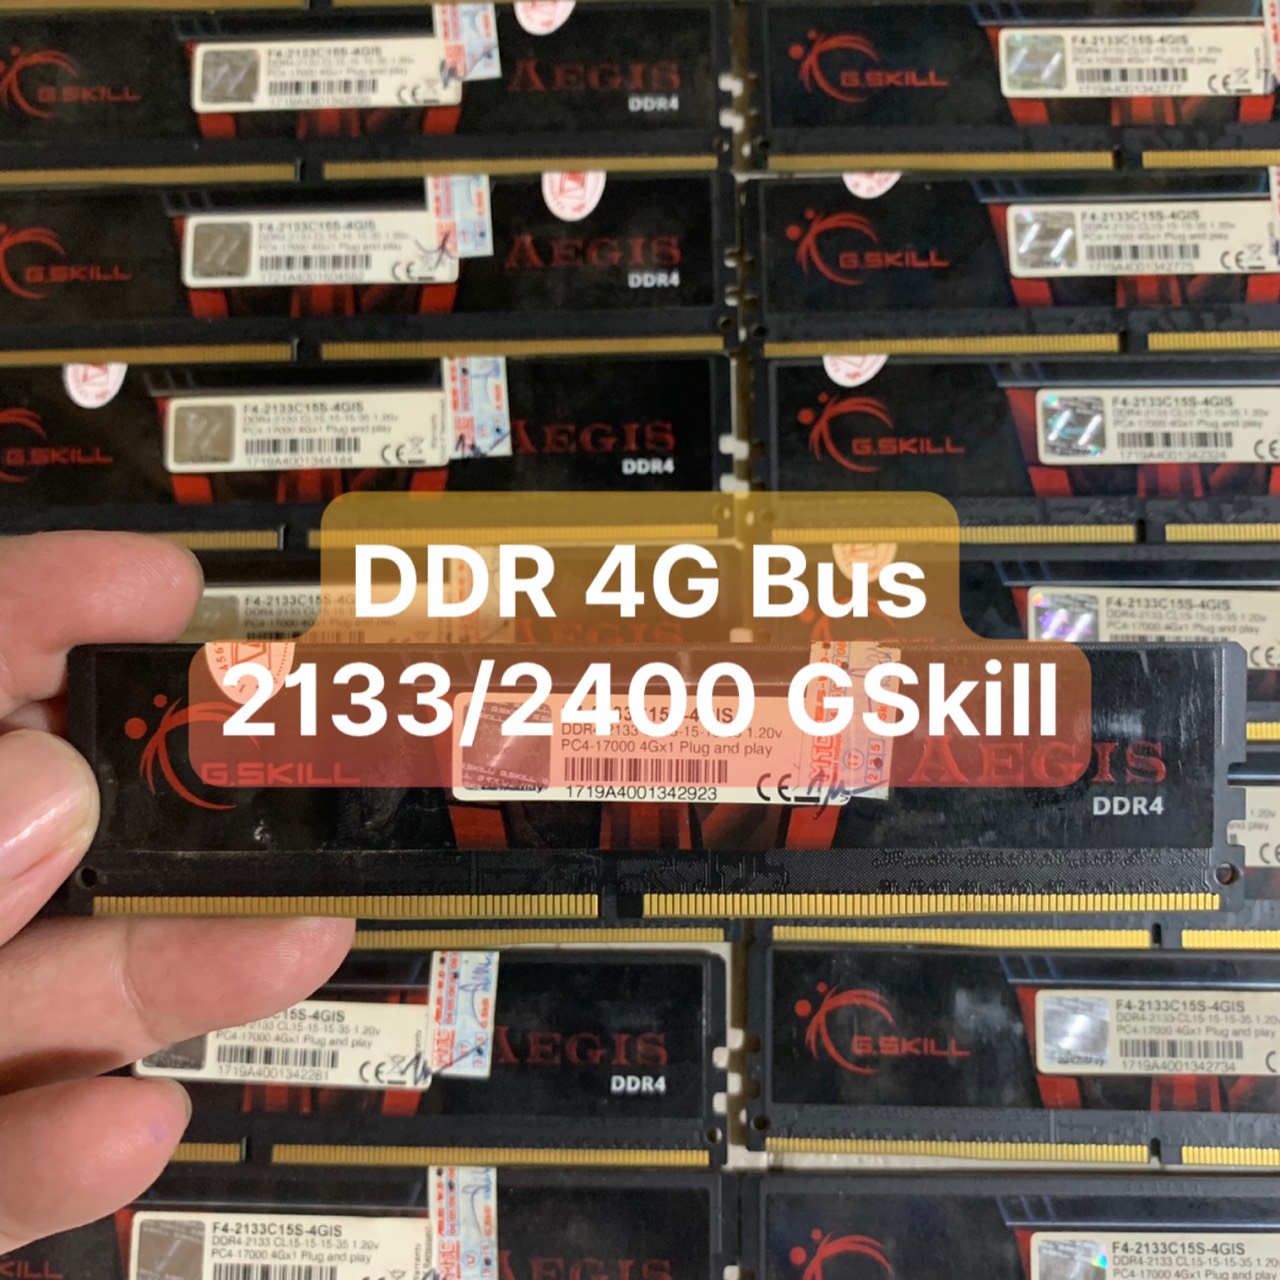 Ram DDR4 G.Skill Aegis4GB - Bus 2133